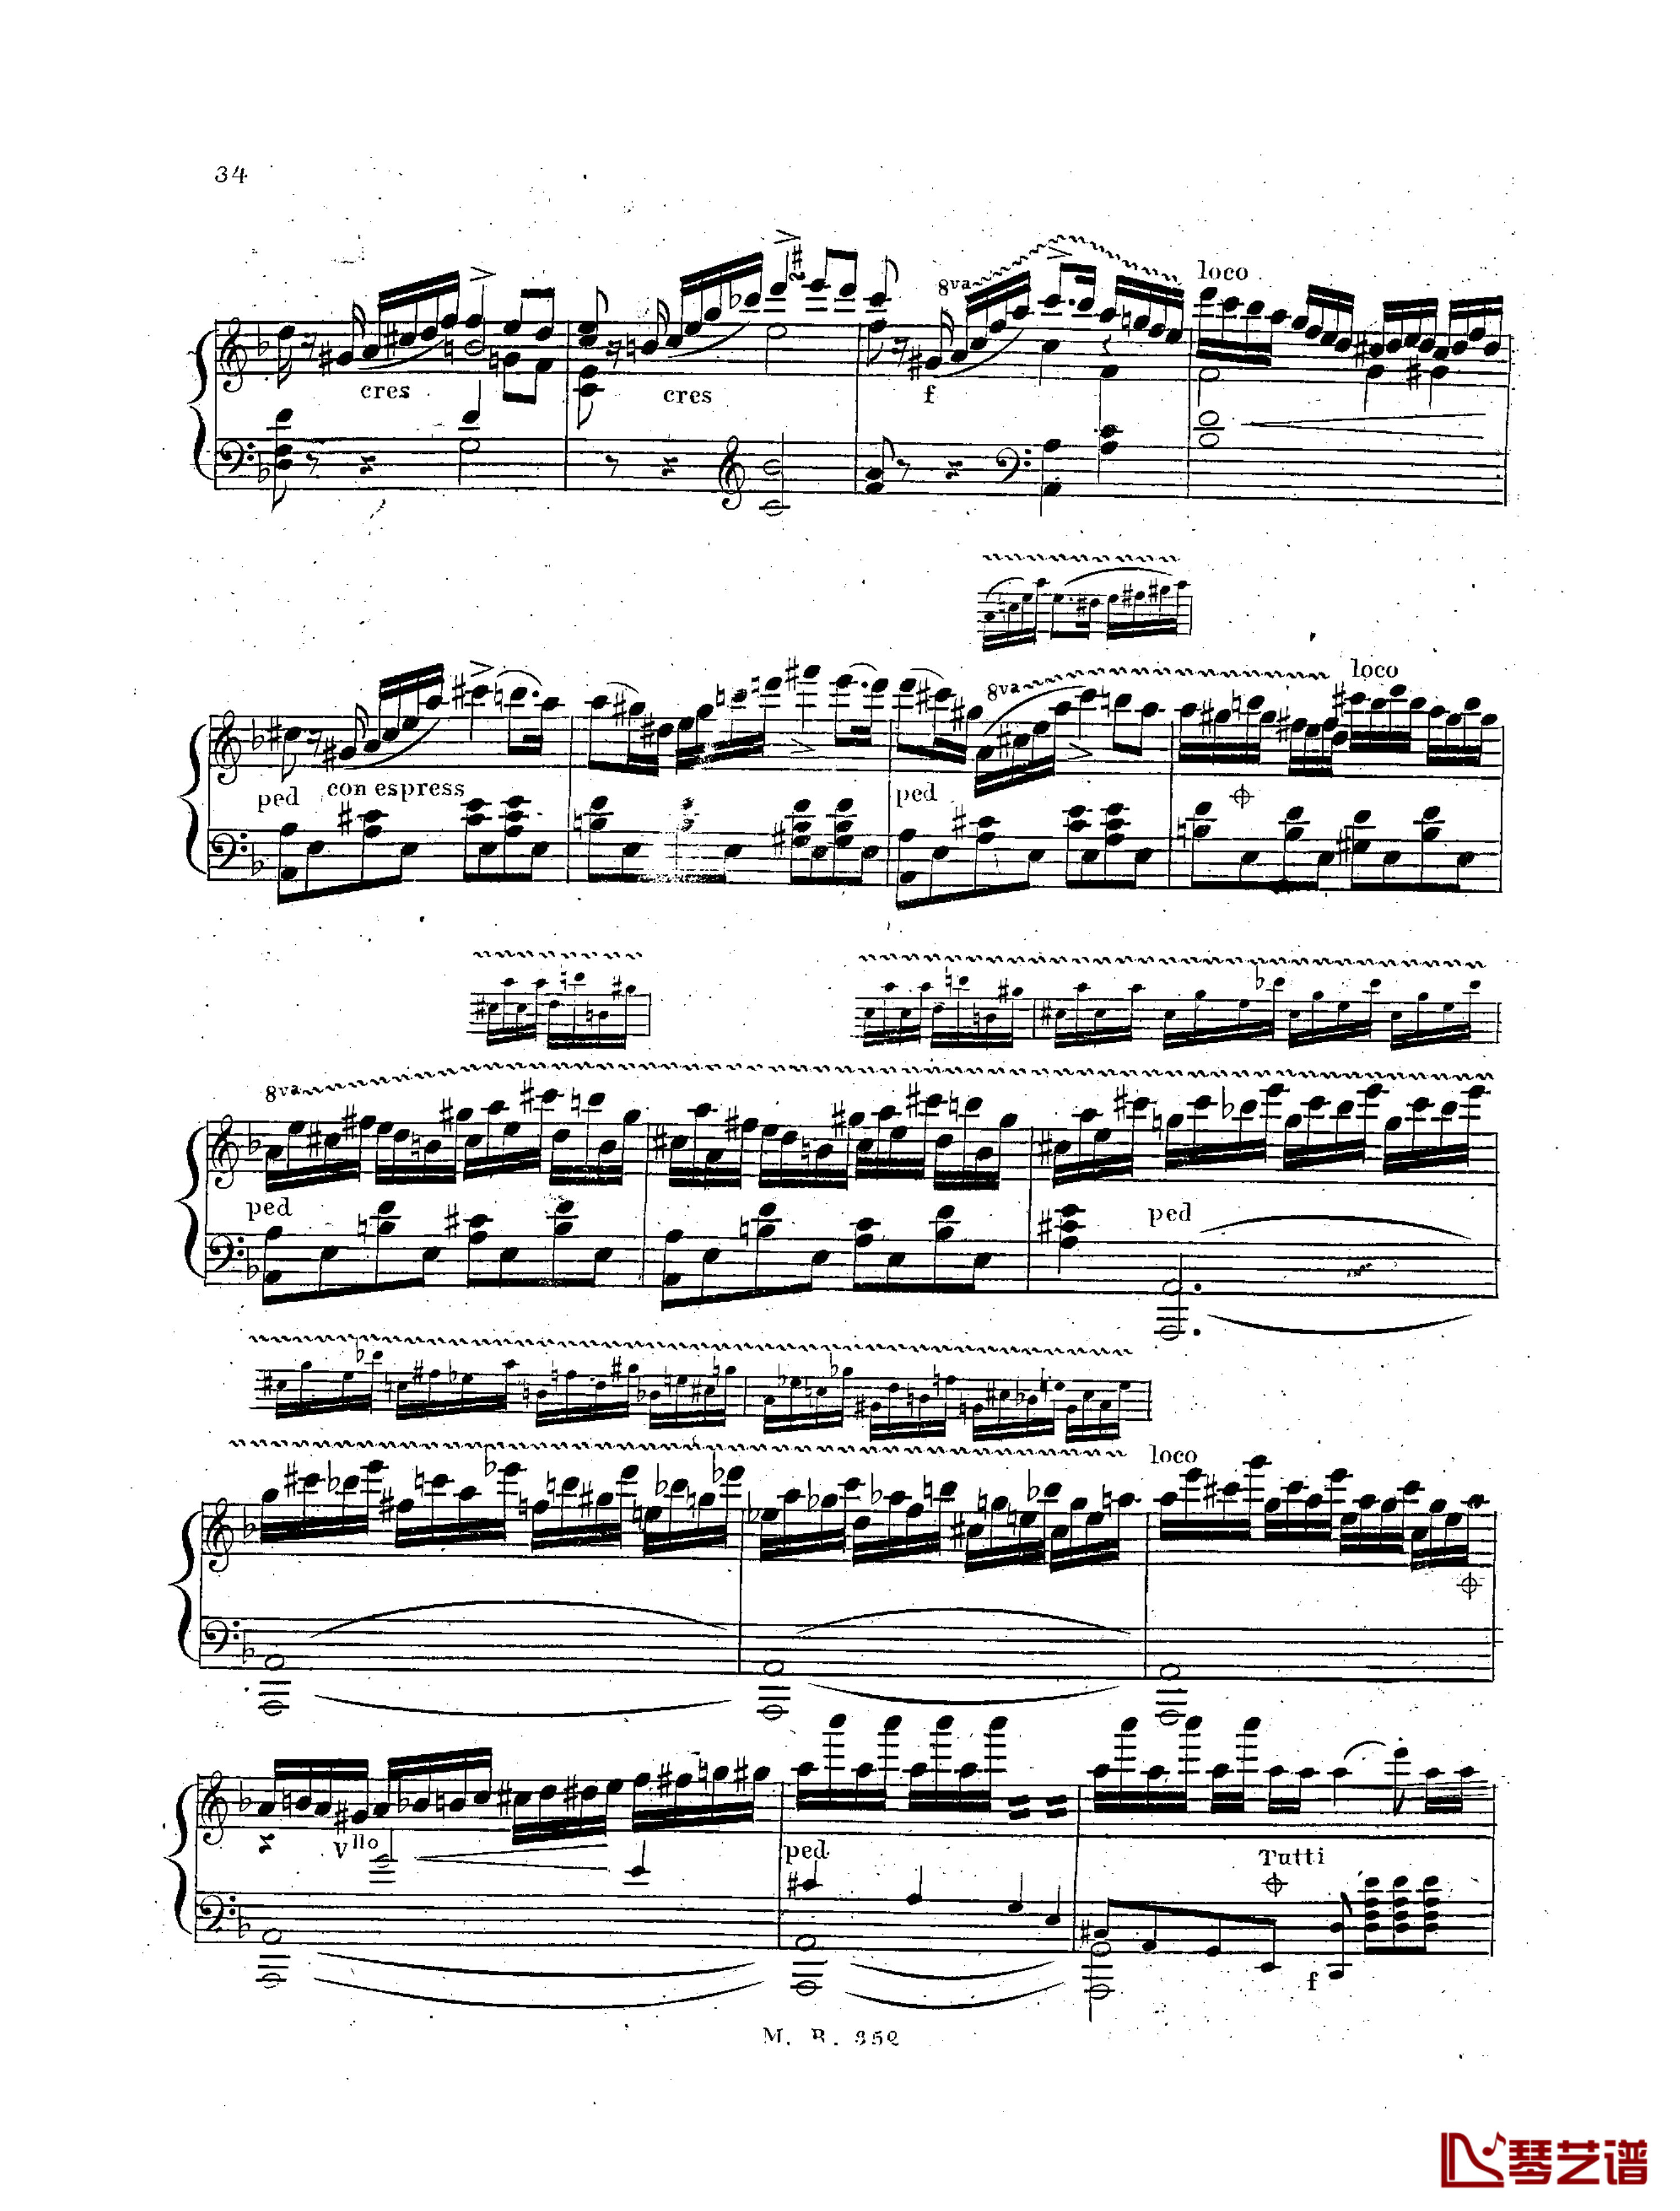  d小调第一钢琴协奏曲 Op.61  第三乐章钢琴谱-卡尔克布雷纳10